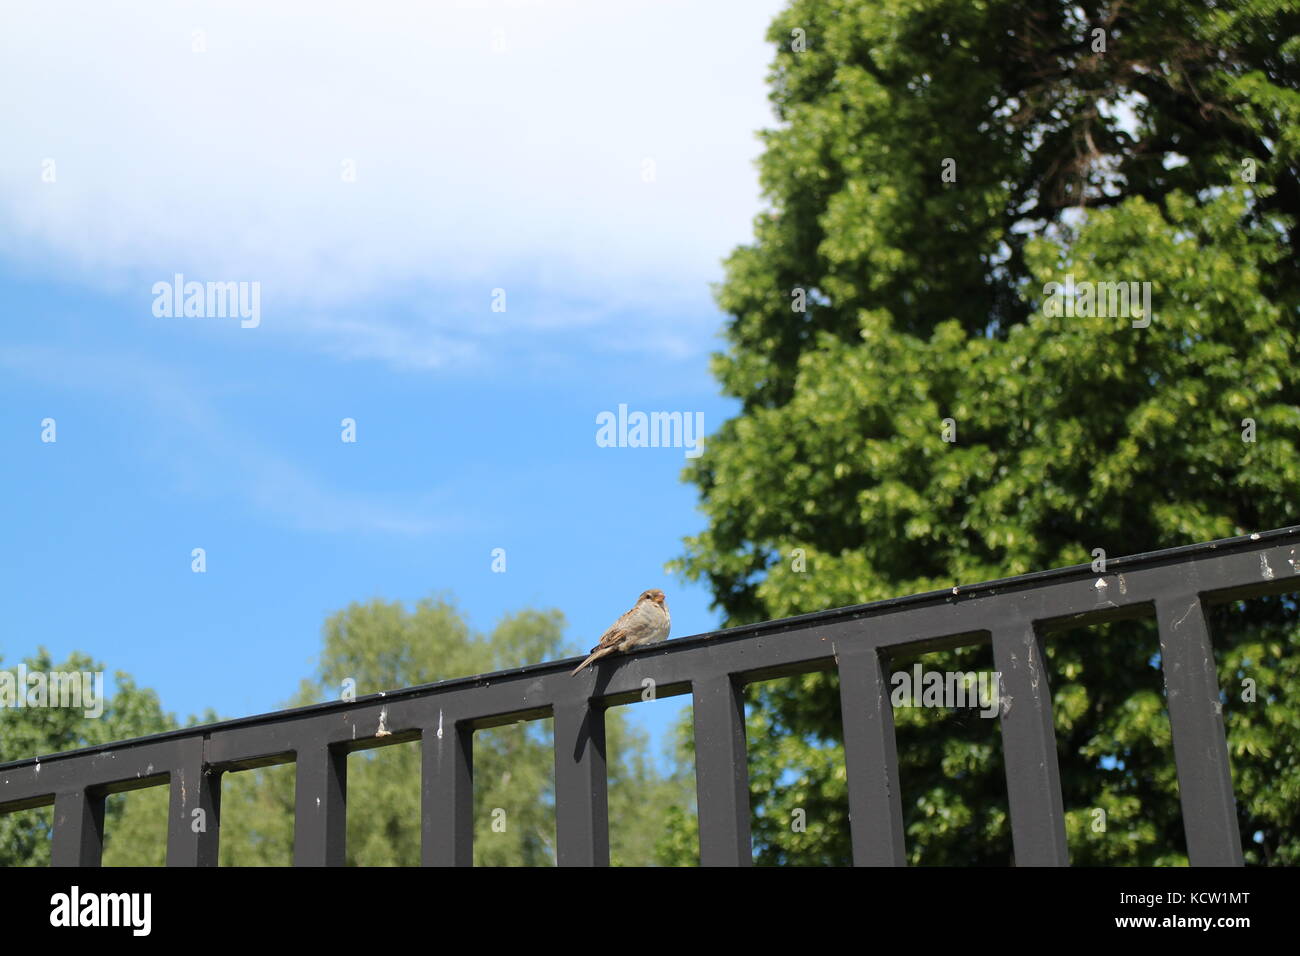 BIRD SITTING ON THE GATE Stock Photo